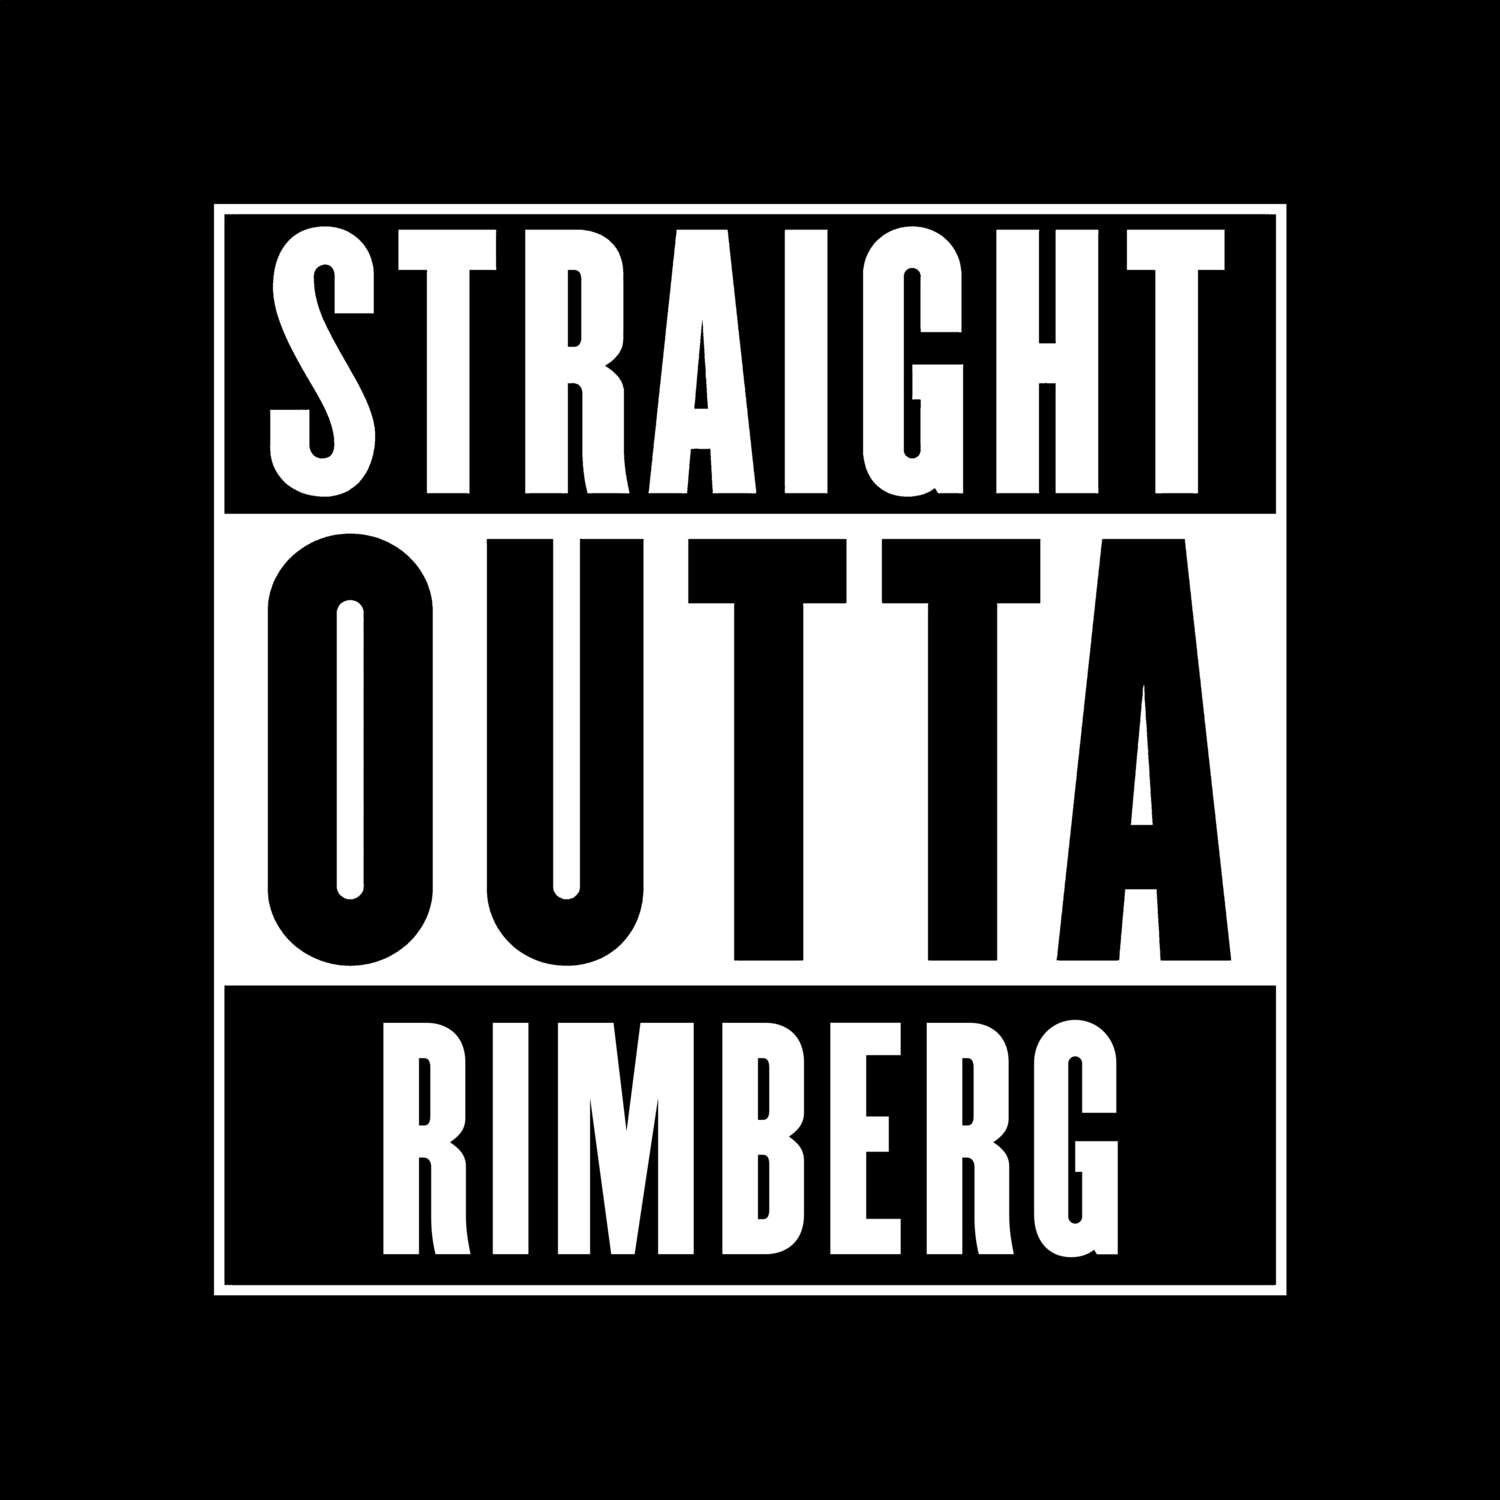 Rimberg T-Shirt »Straight Outta«